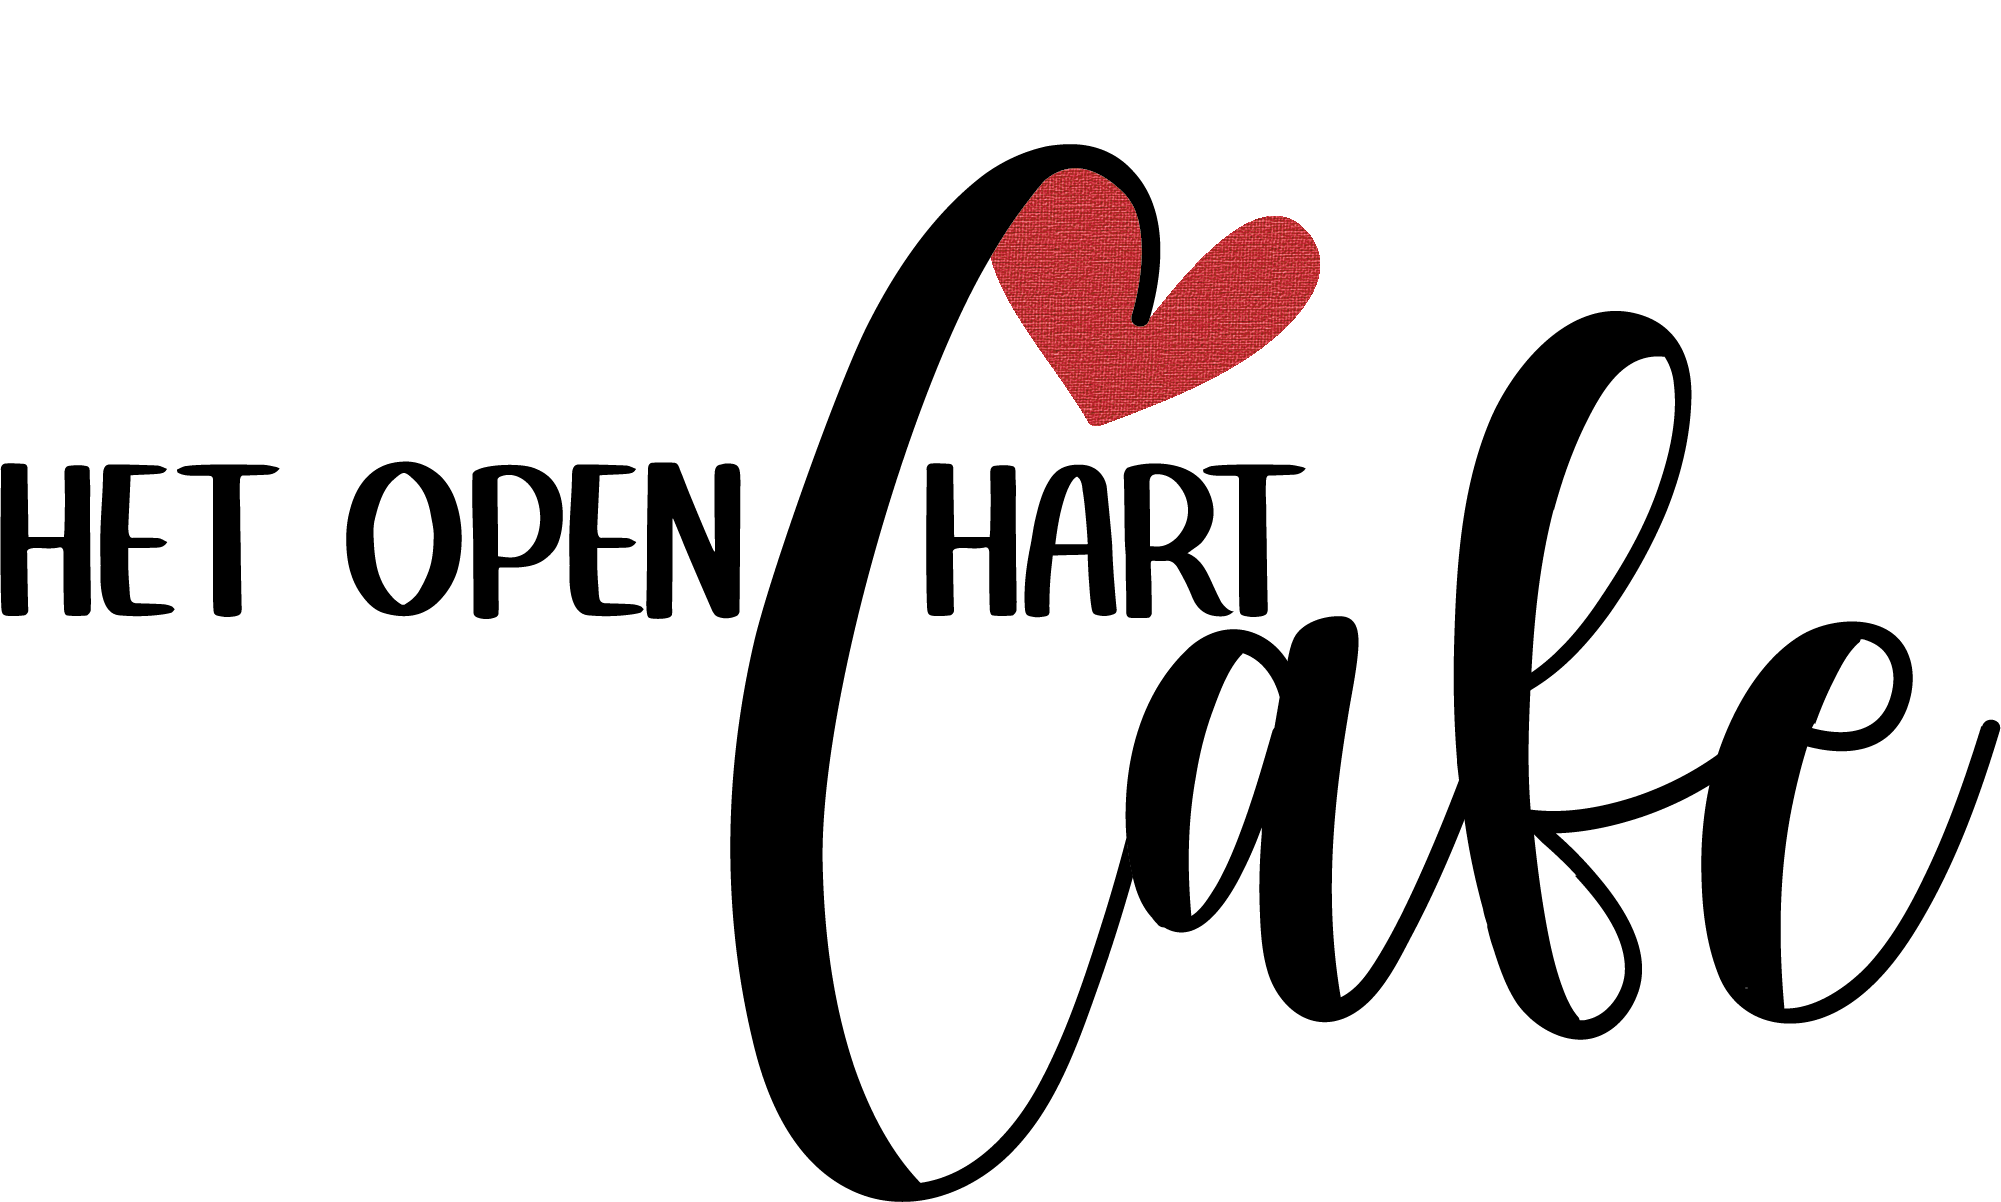 OpenHart Café